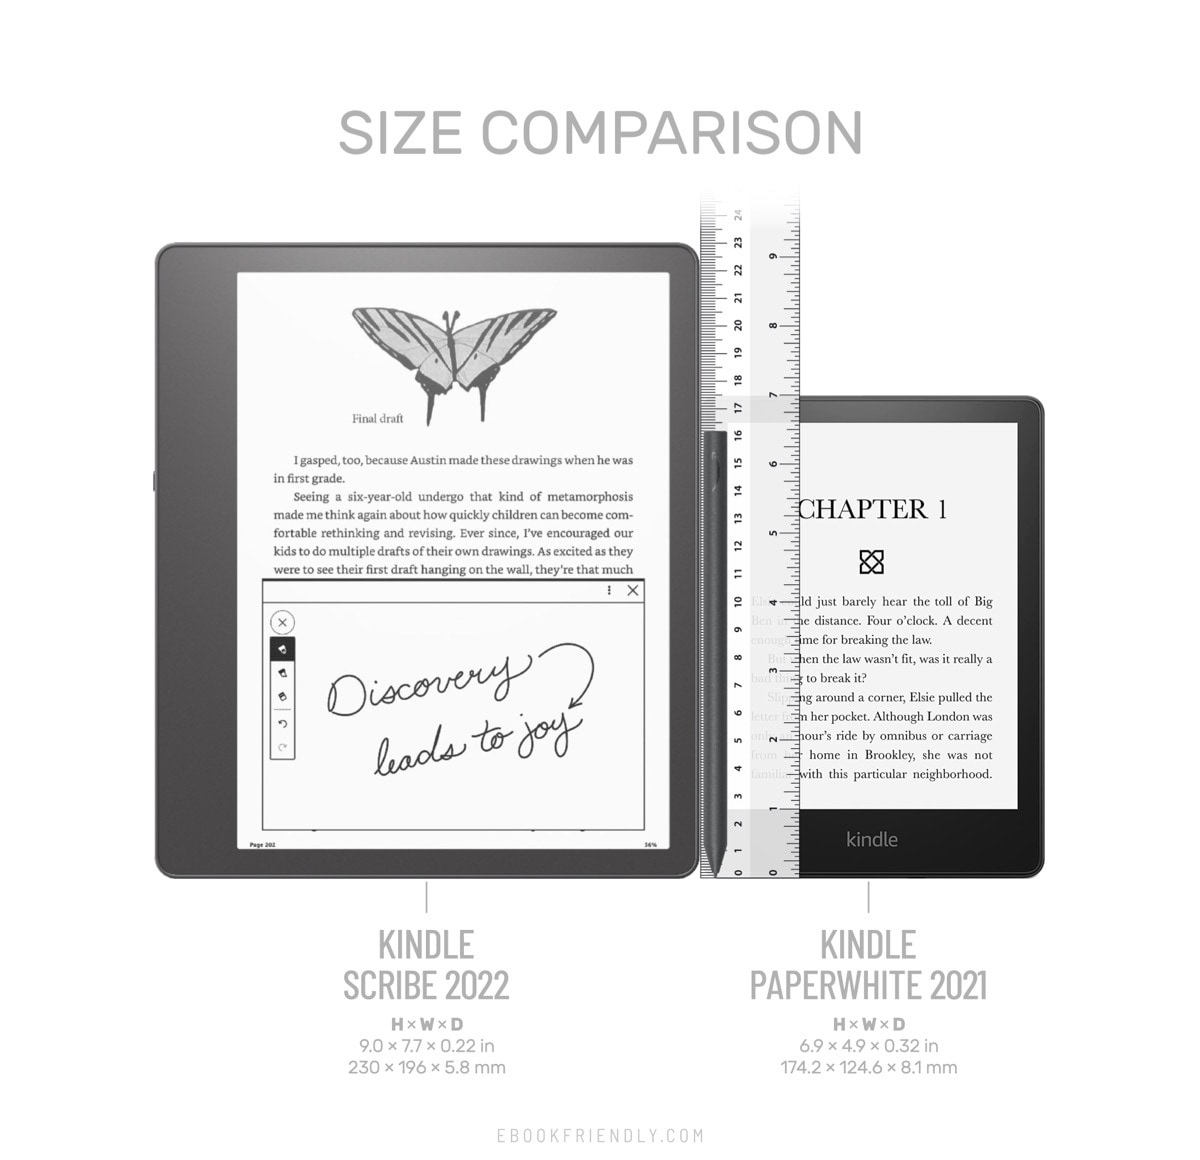 Kindle Scribe 10.2 vs Kindle Paperwhite 6.8 size comparison